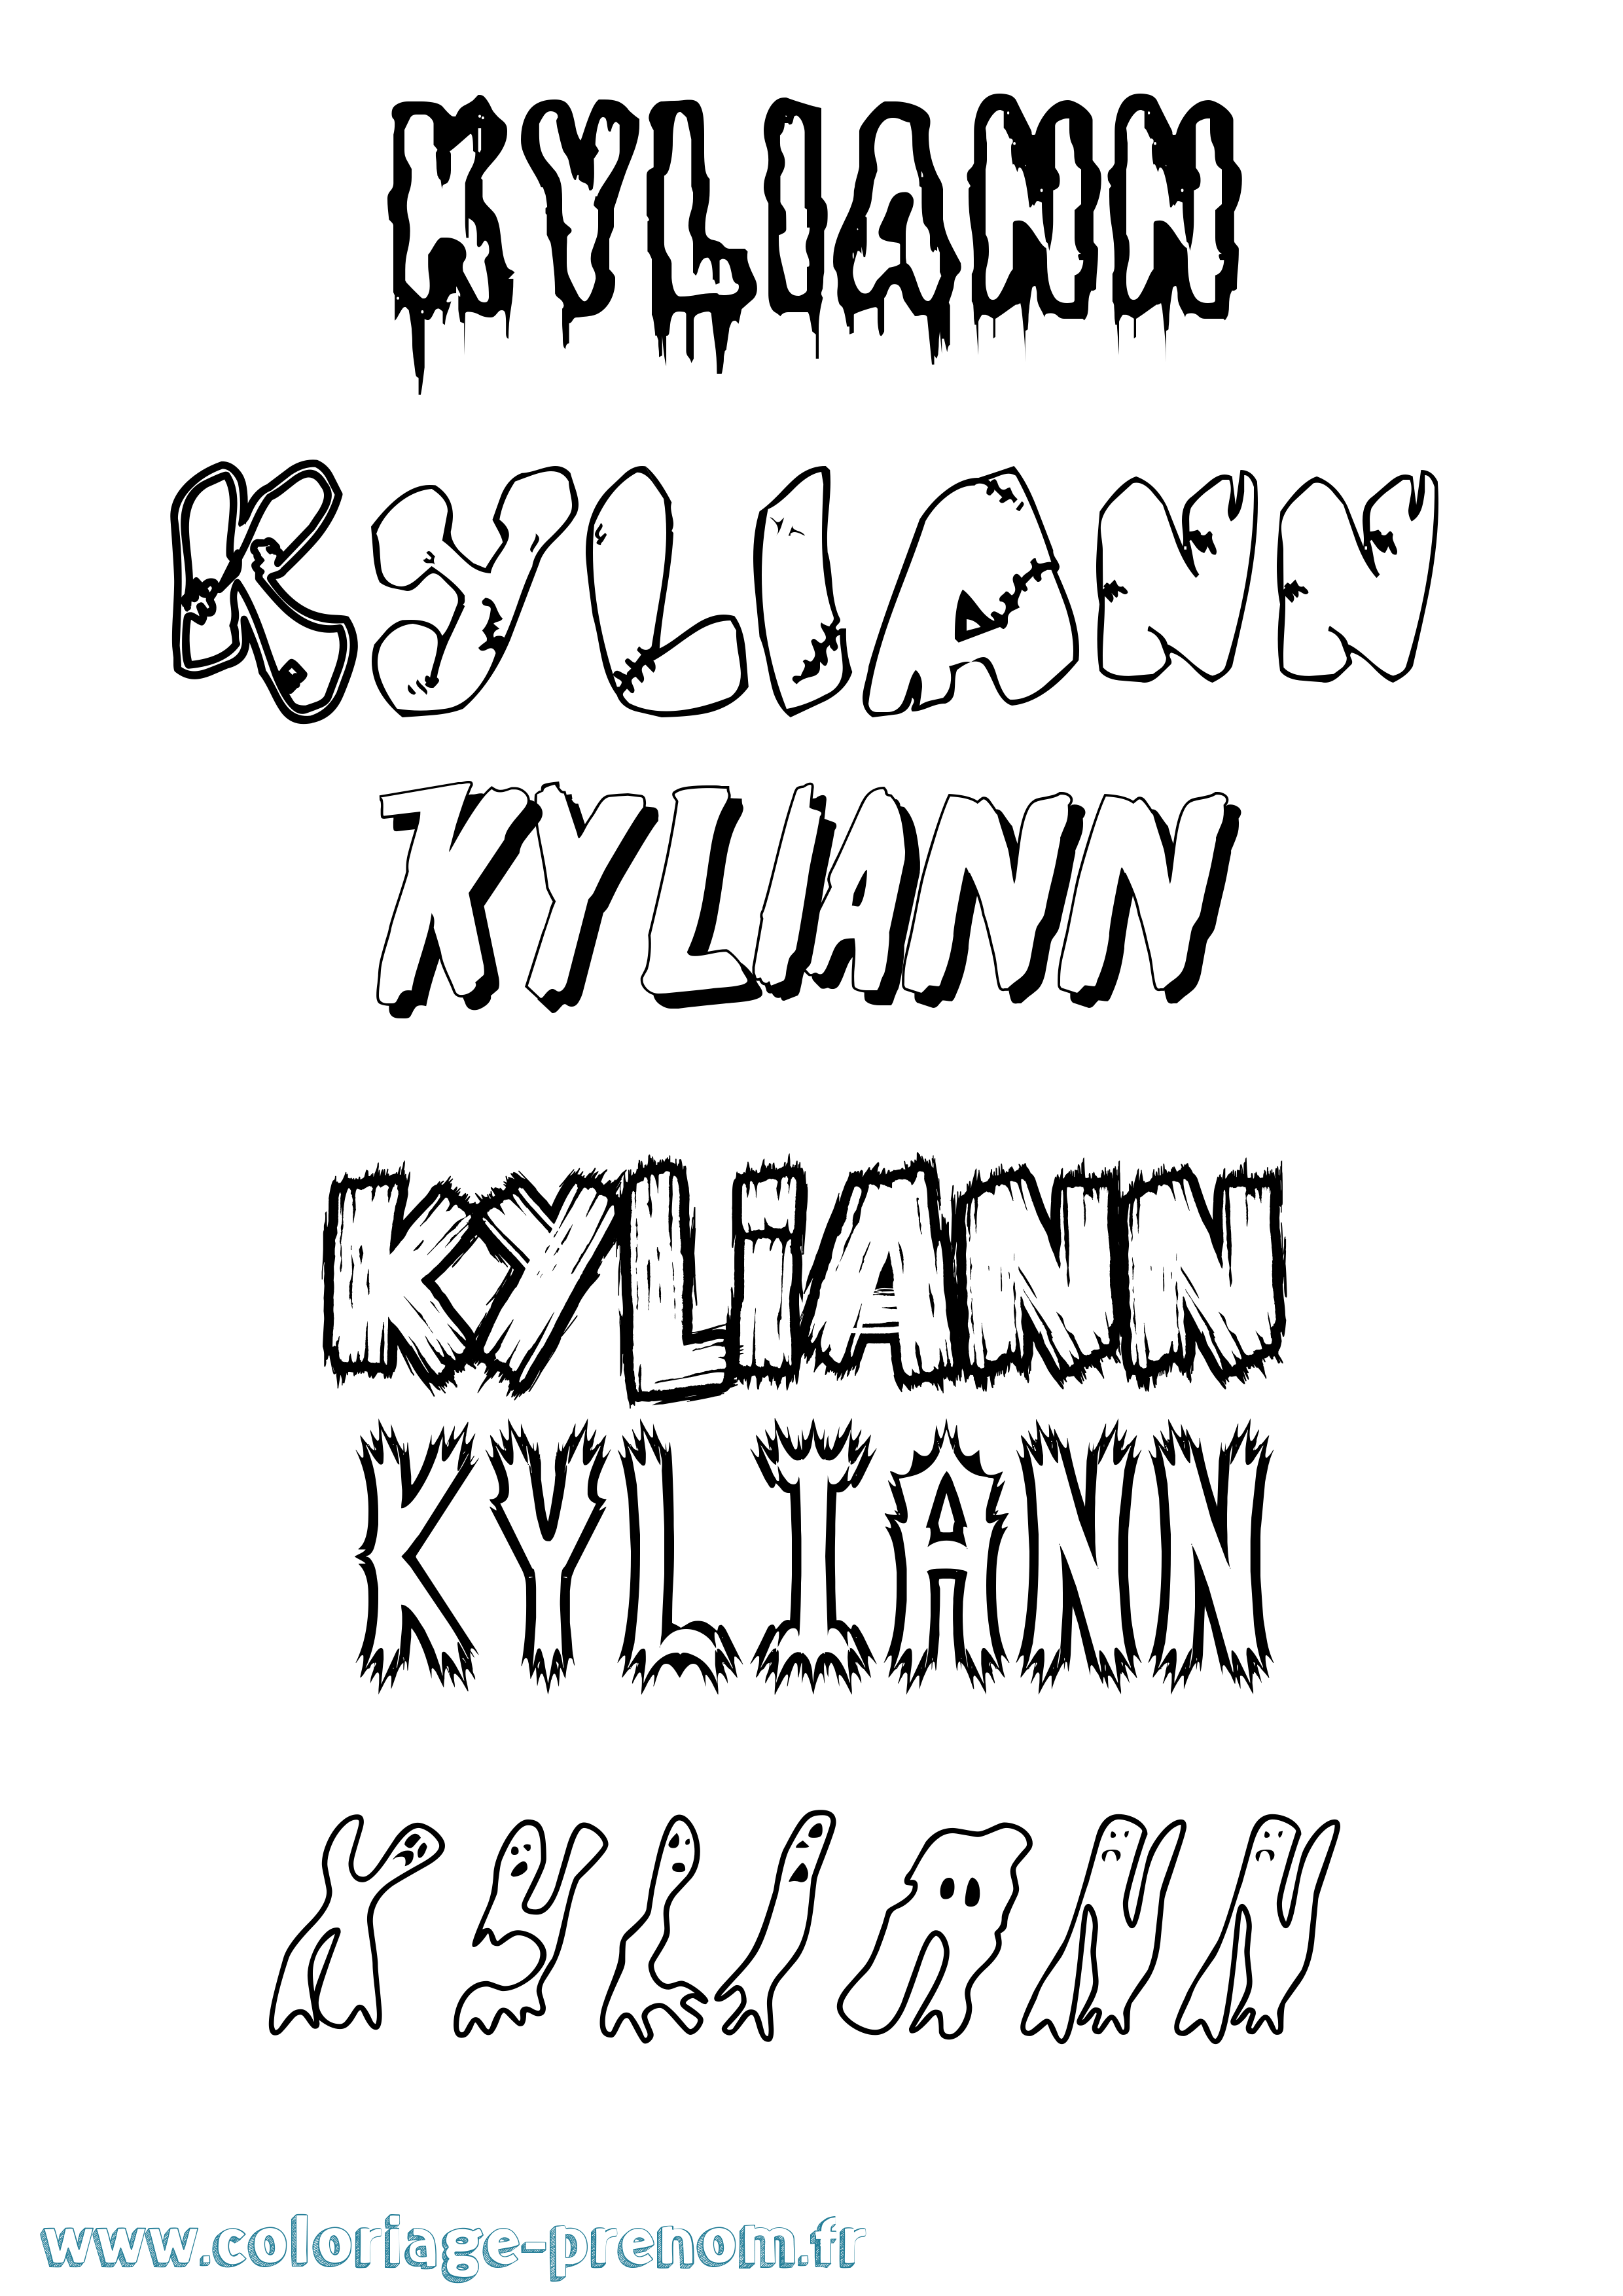 Coloriage prénom Kyliann Frisson